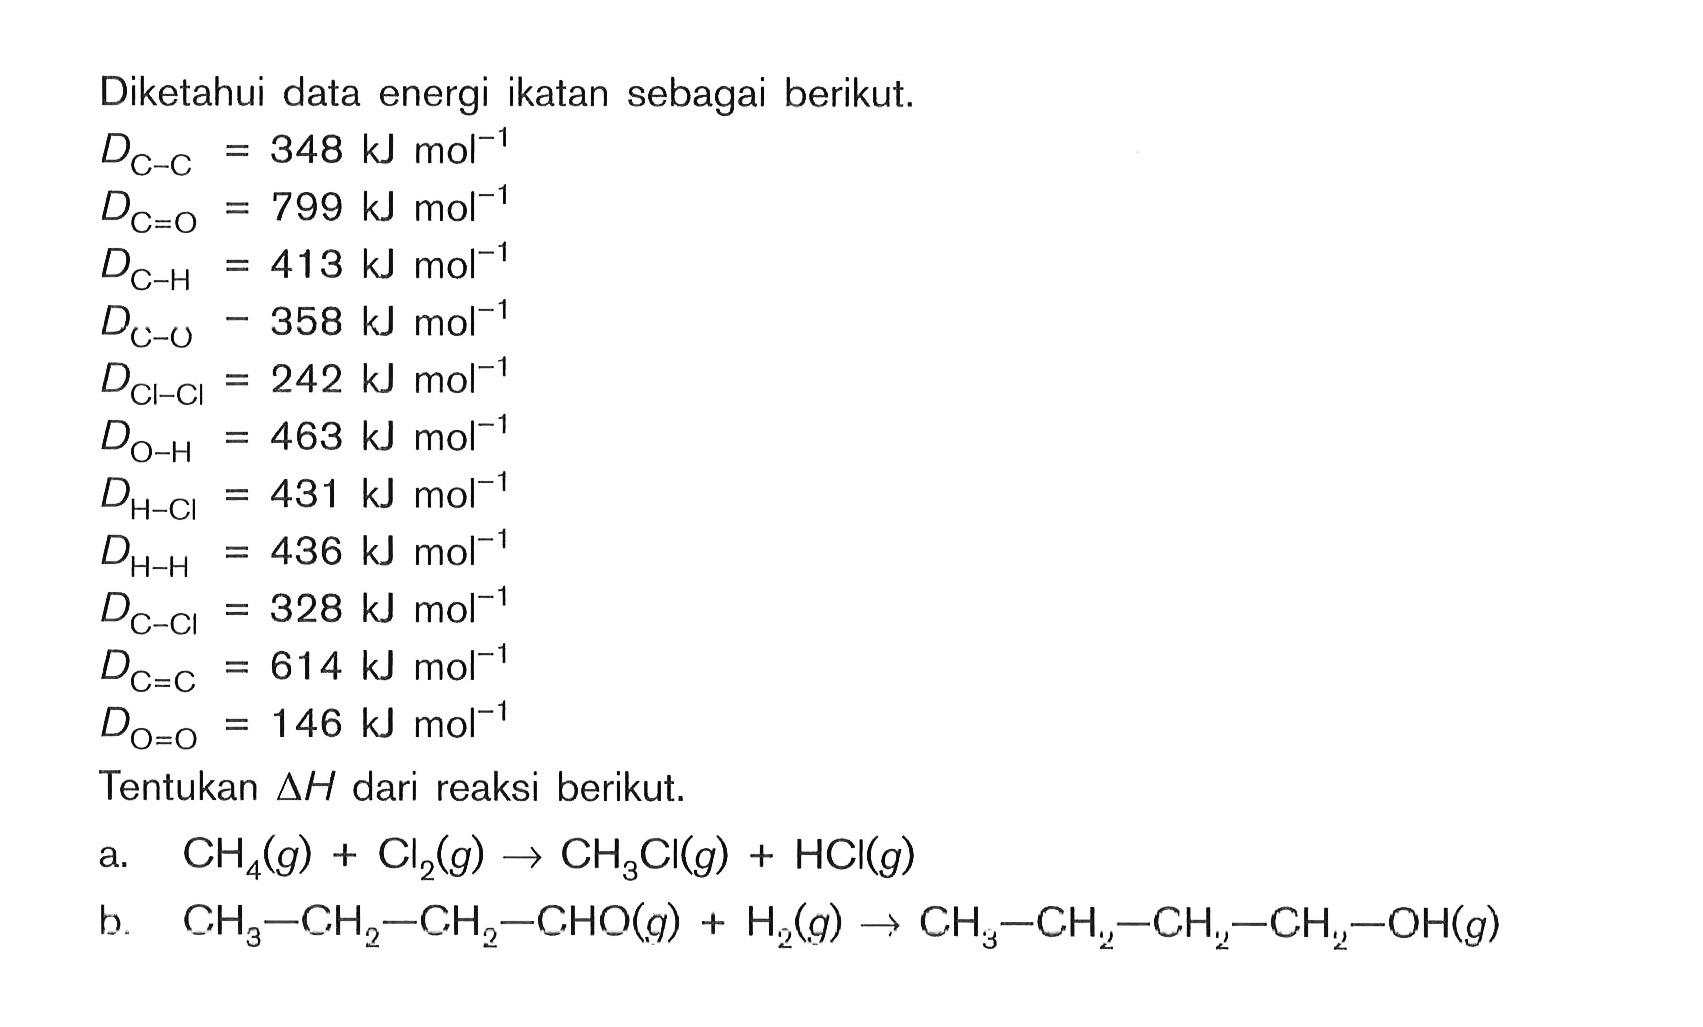 Diketahui data energi ikatan sebagai berikut: DC-C = 348 kJ mol^-1 DC=O = 799 kJ mol^-1 DC-H = 413 kJ mol^-1 DC-O = 358 kJ mol^-1 DCl-Cl = 242 kJ mol^-1 DO-H = 463 kJ mol^-1 DH-Cl = 431 kJ mol^-1 DH-H = 436 kJ mol^-1 DC-Cl = 328 kJ mol^-1 DC=C = 614 kJ mol^-1 DO=O = 146 kJ mol^-1 Tentukan delta H dari reaksi berikut: a. CH4(g) + Cl2(g) -> CH3Cl(g) + HCI(g) b CH3 - CH2 - CH2 - CHO(g) + H2(g) -> CH3 - CH2 - CH2 - CH2 - OH(g)